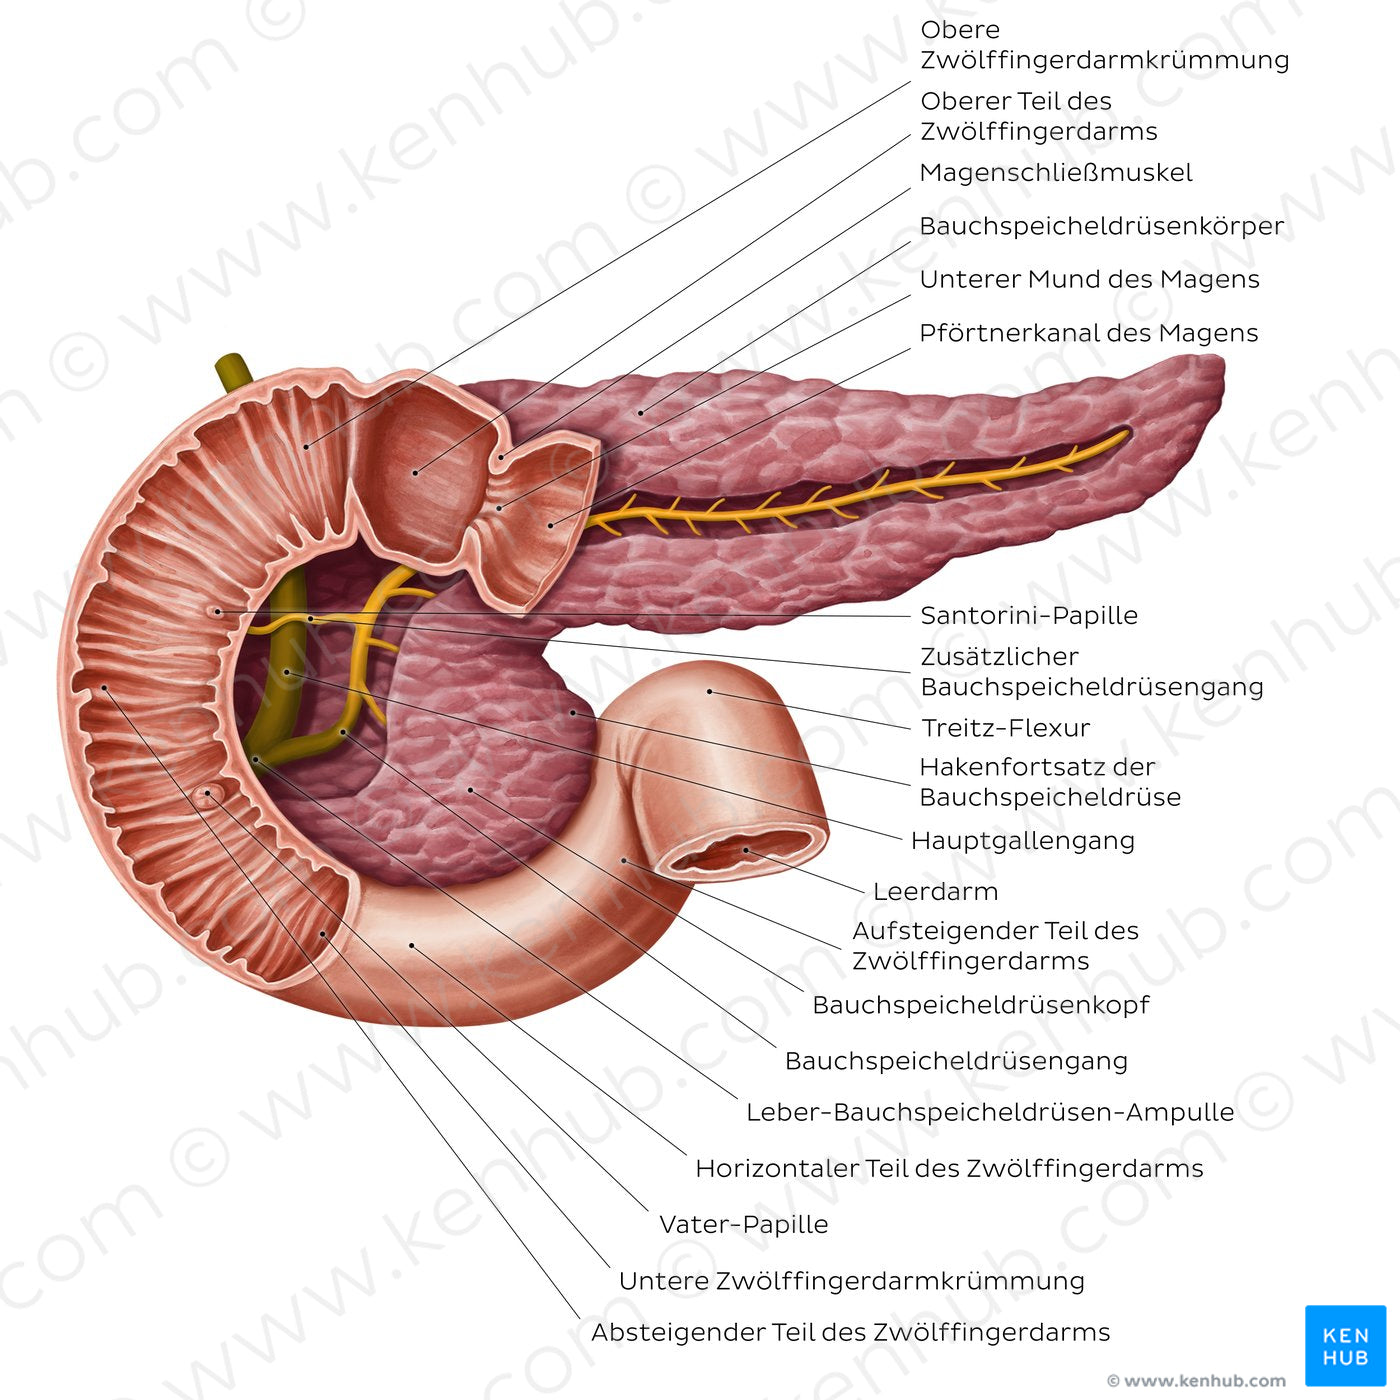 Pancreatic duct system (German)